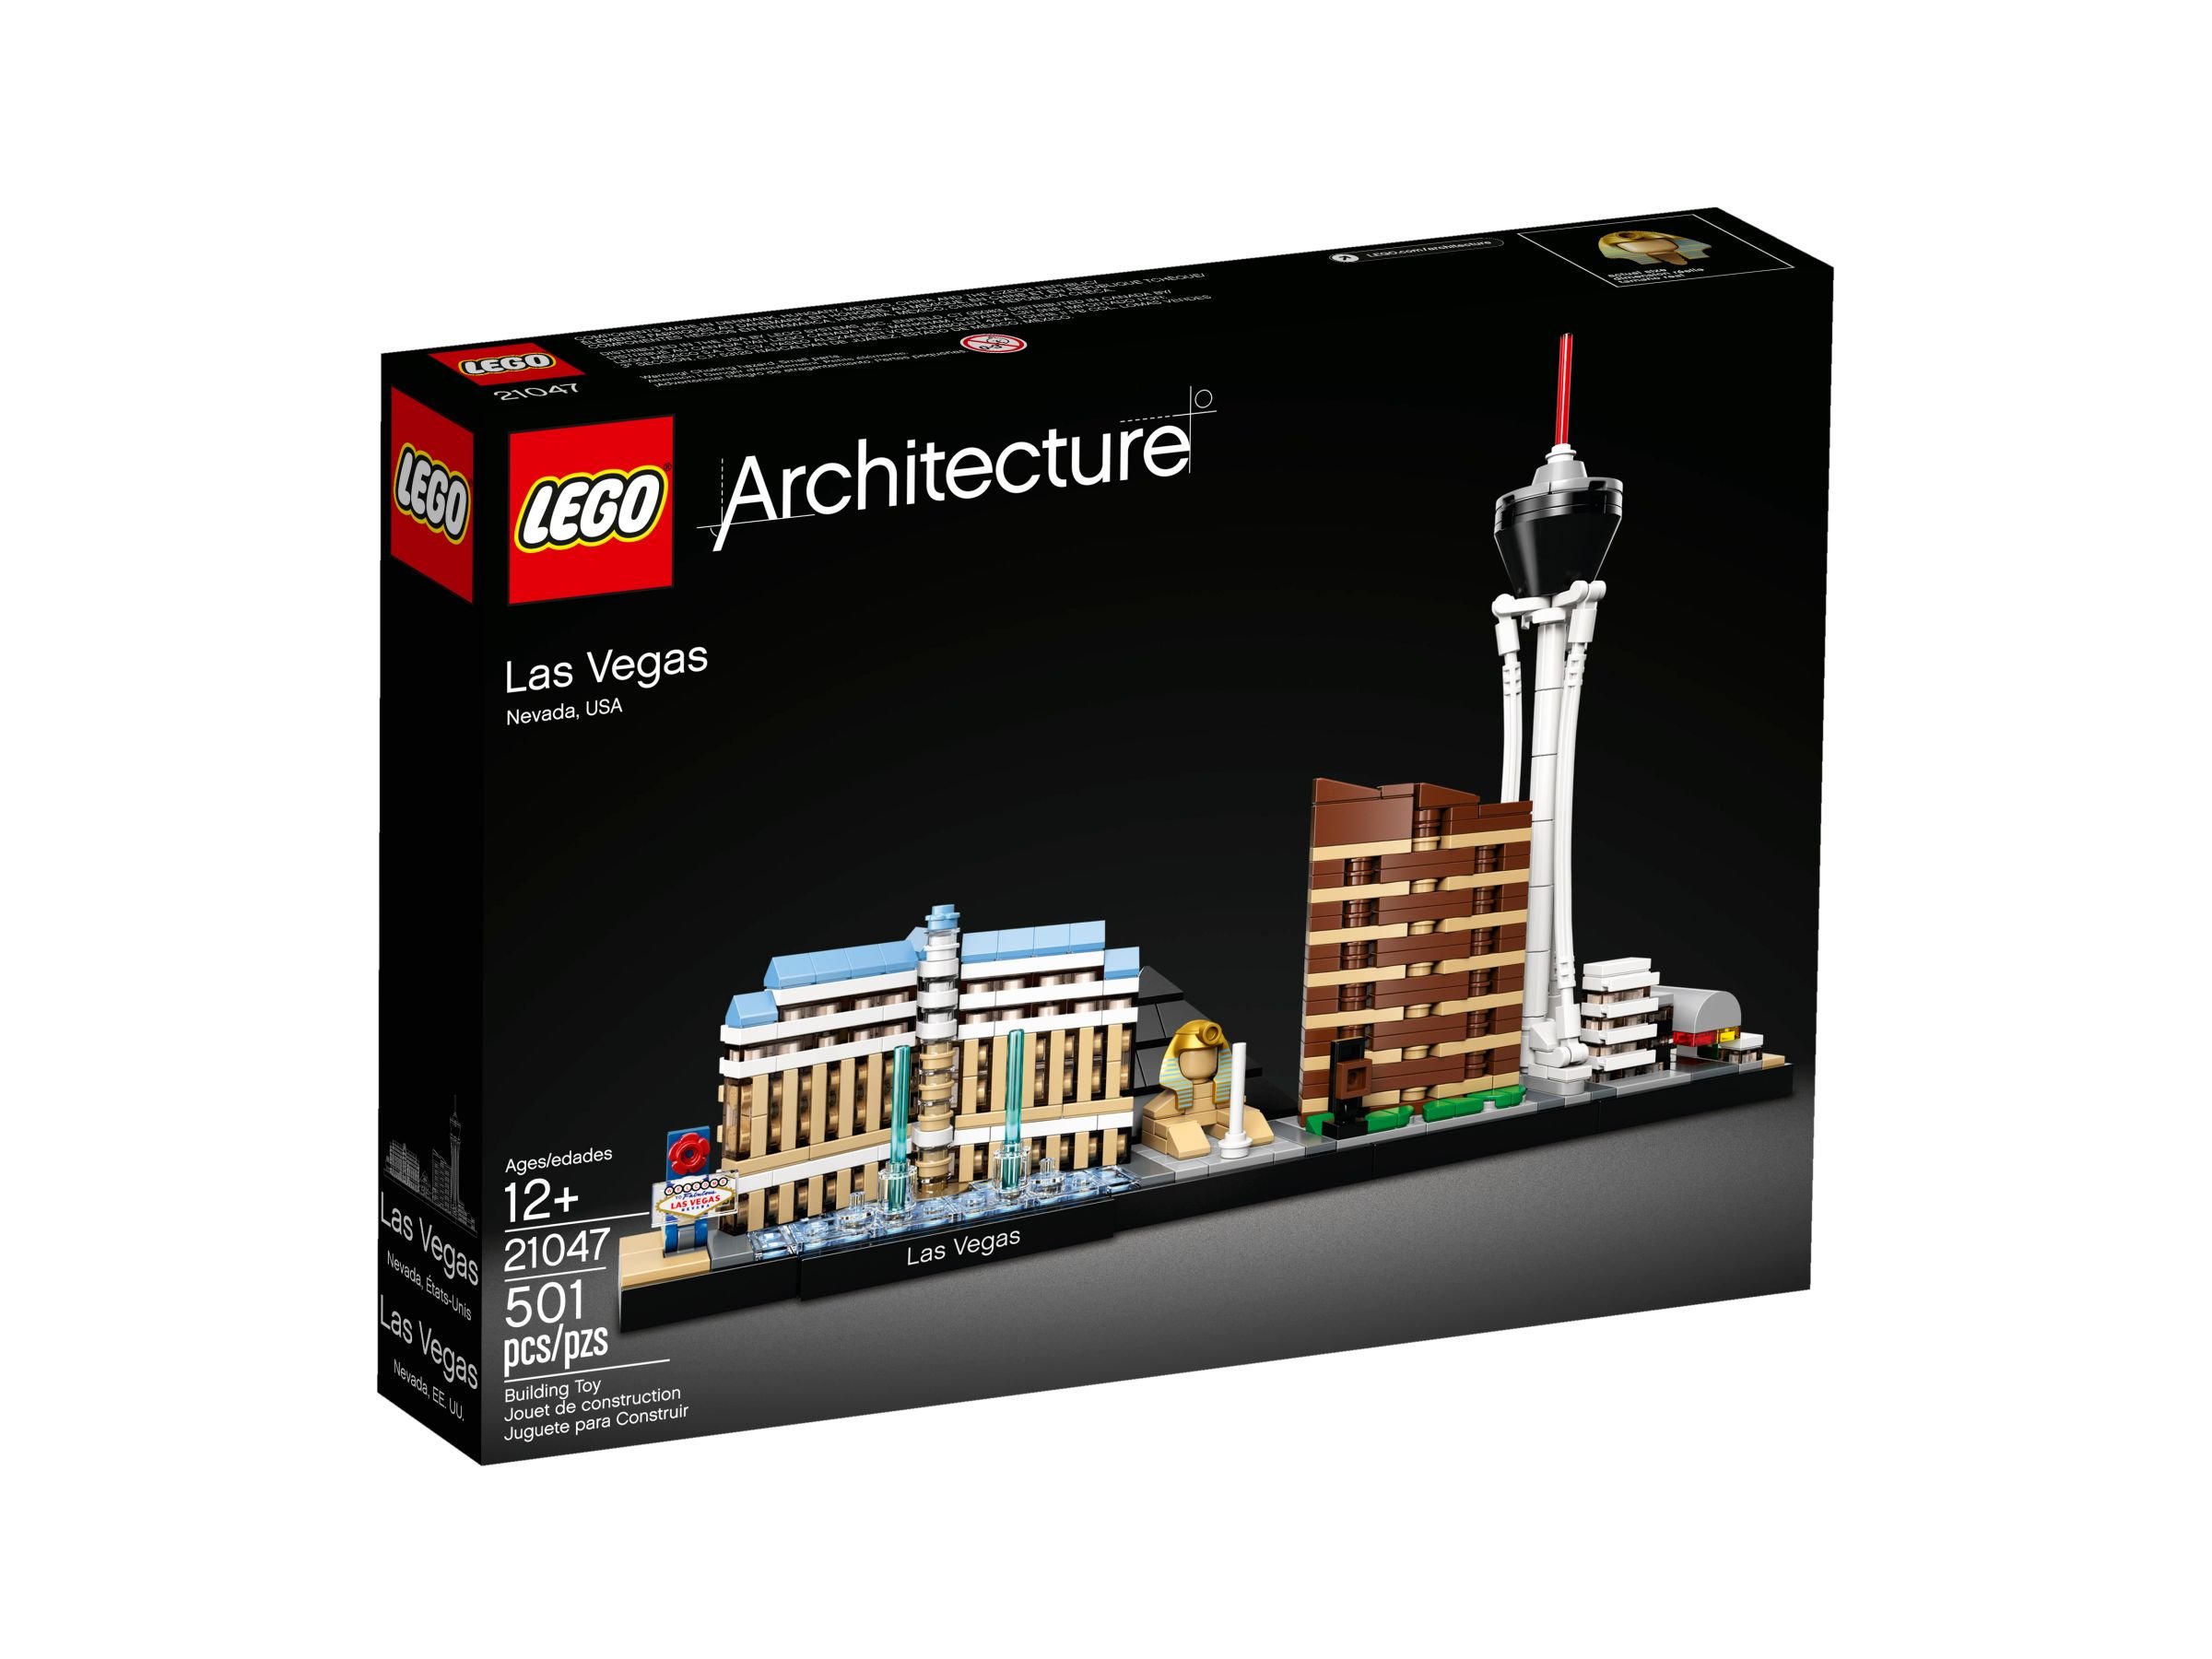 LEGO Architecture 21047 Las Vegas LEGO_21047_alt1.jpg